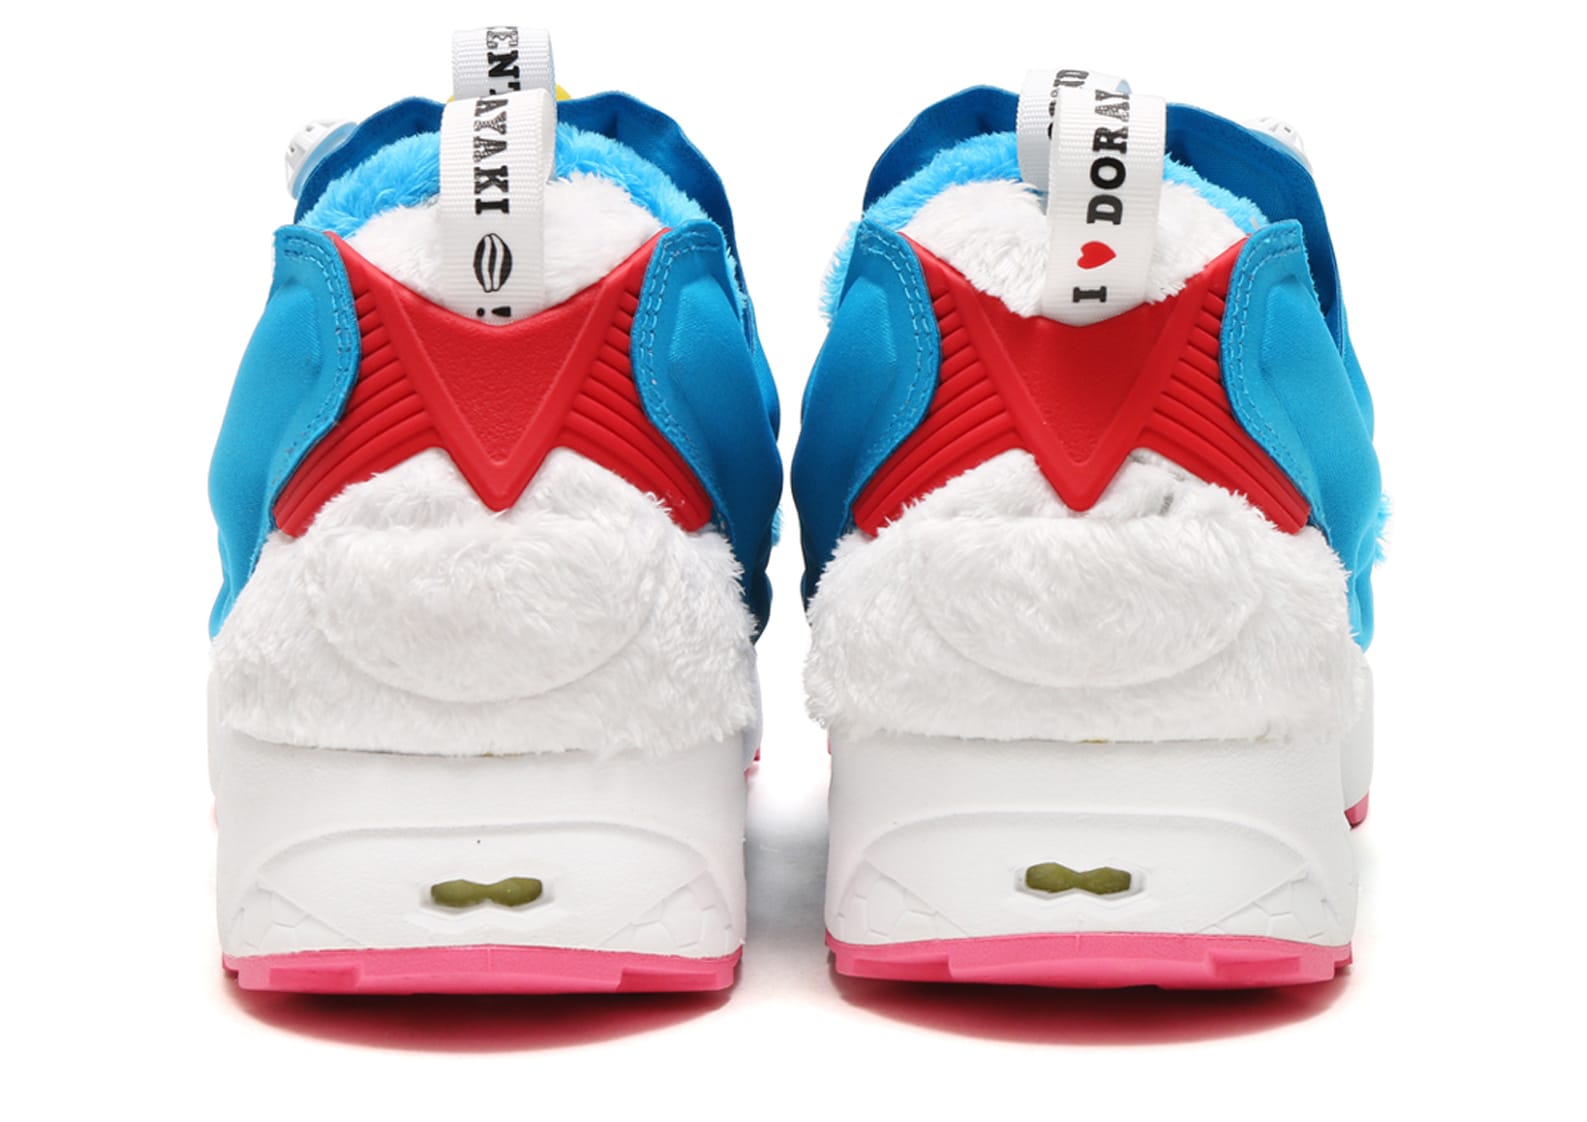 Packer Shoes Atmos Doraemon Reebok Insta Pump Fury Heel